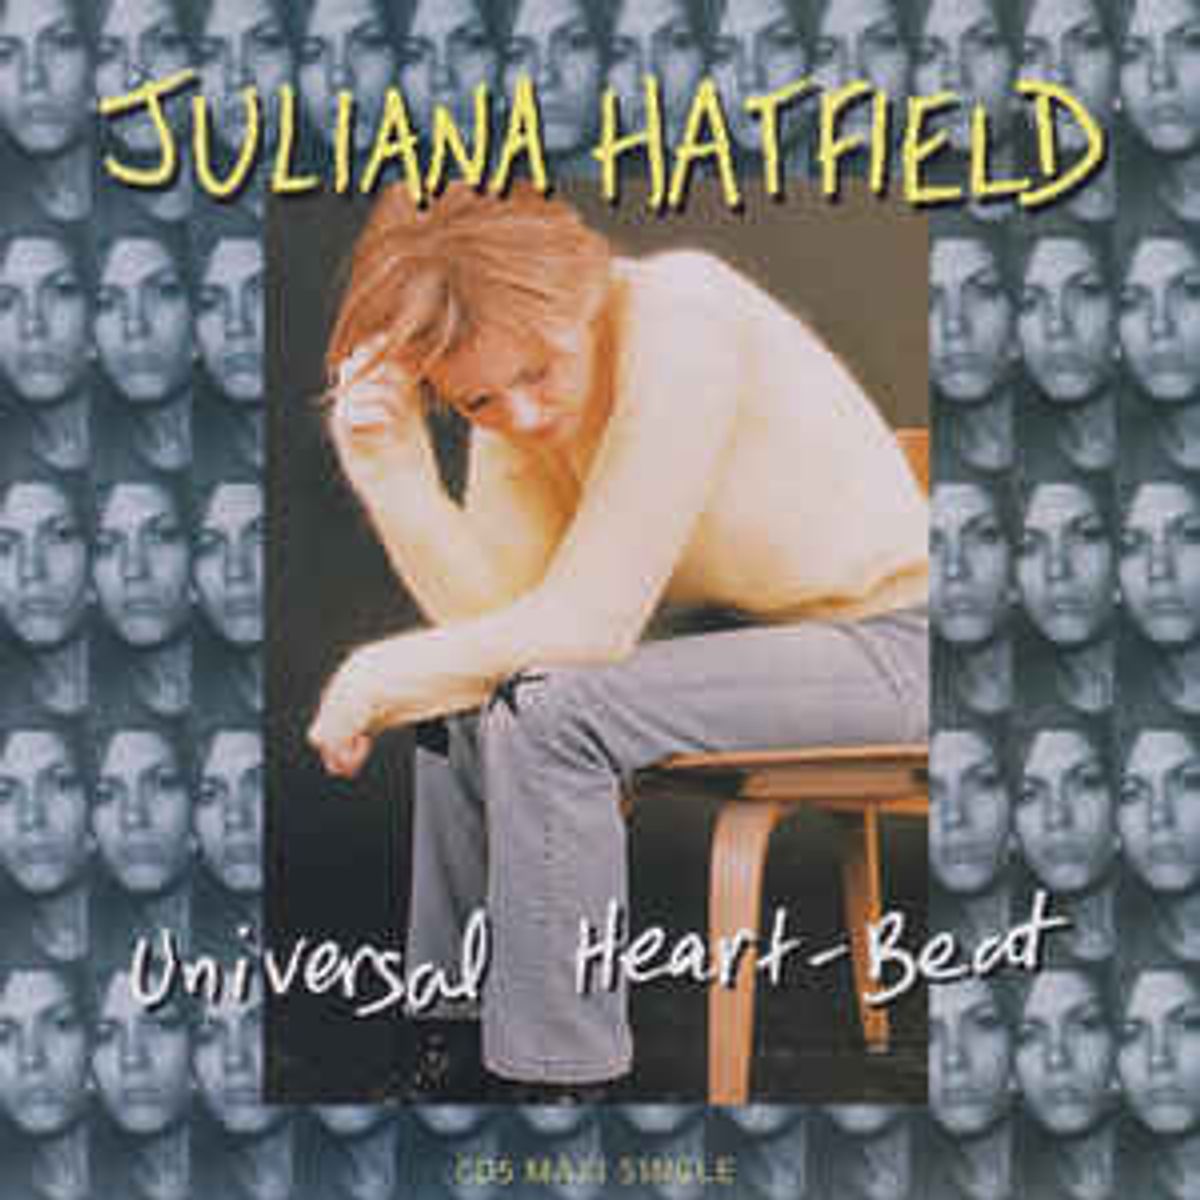 #StraffeMadammen - Juliana Hatfield - Universal Heart-beat (1995)